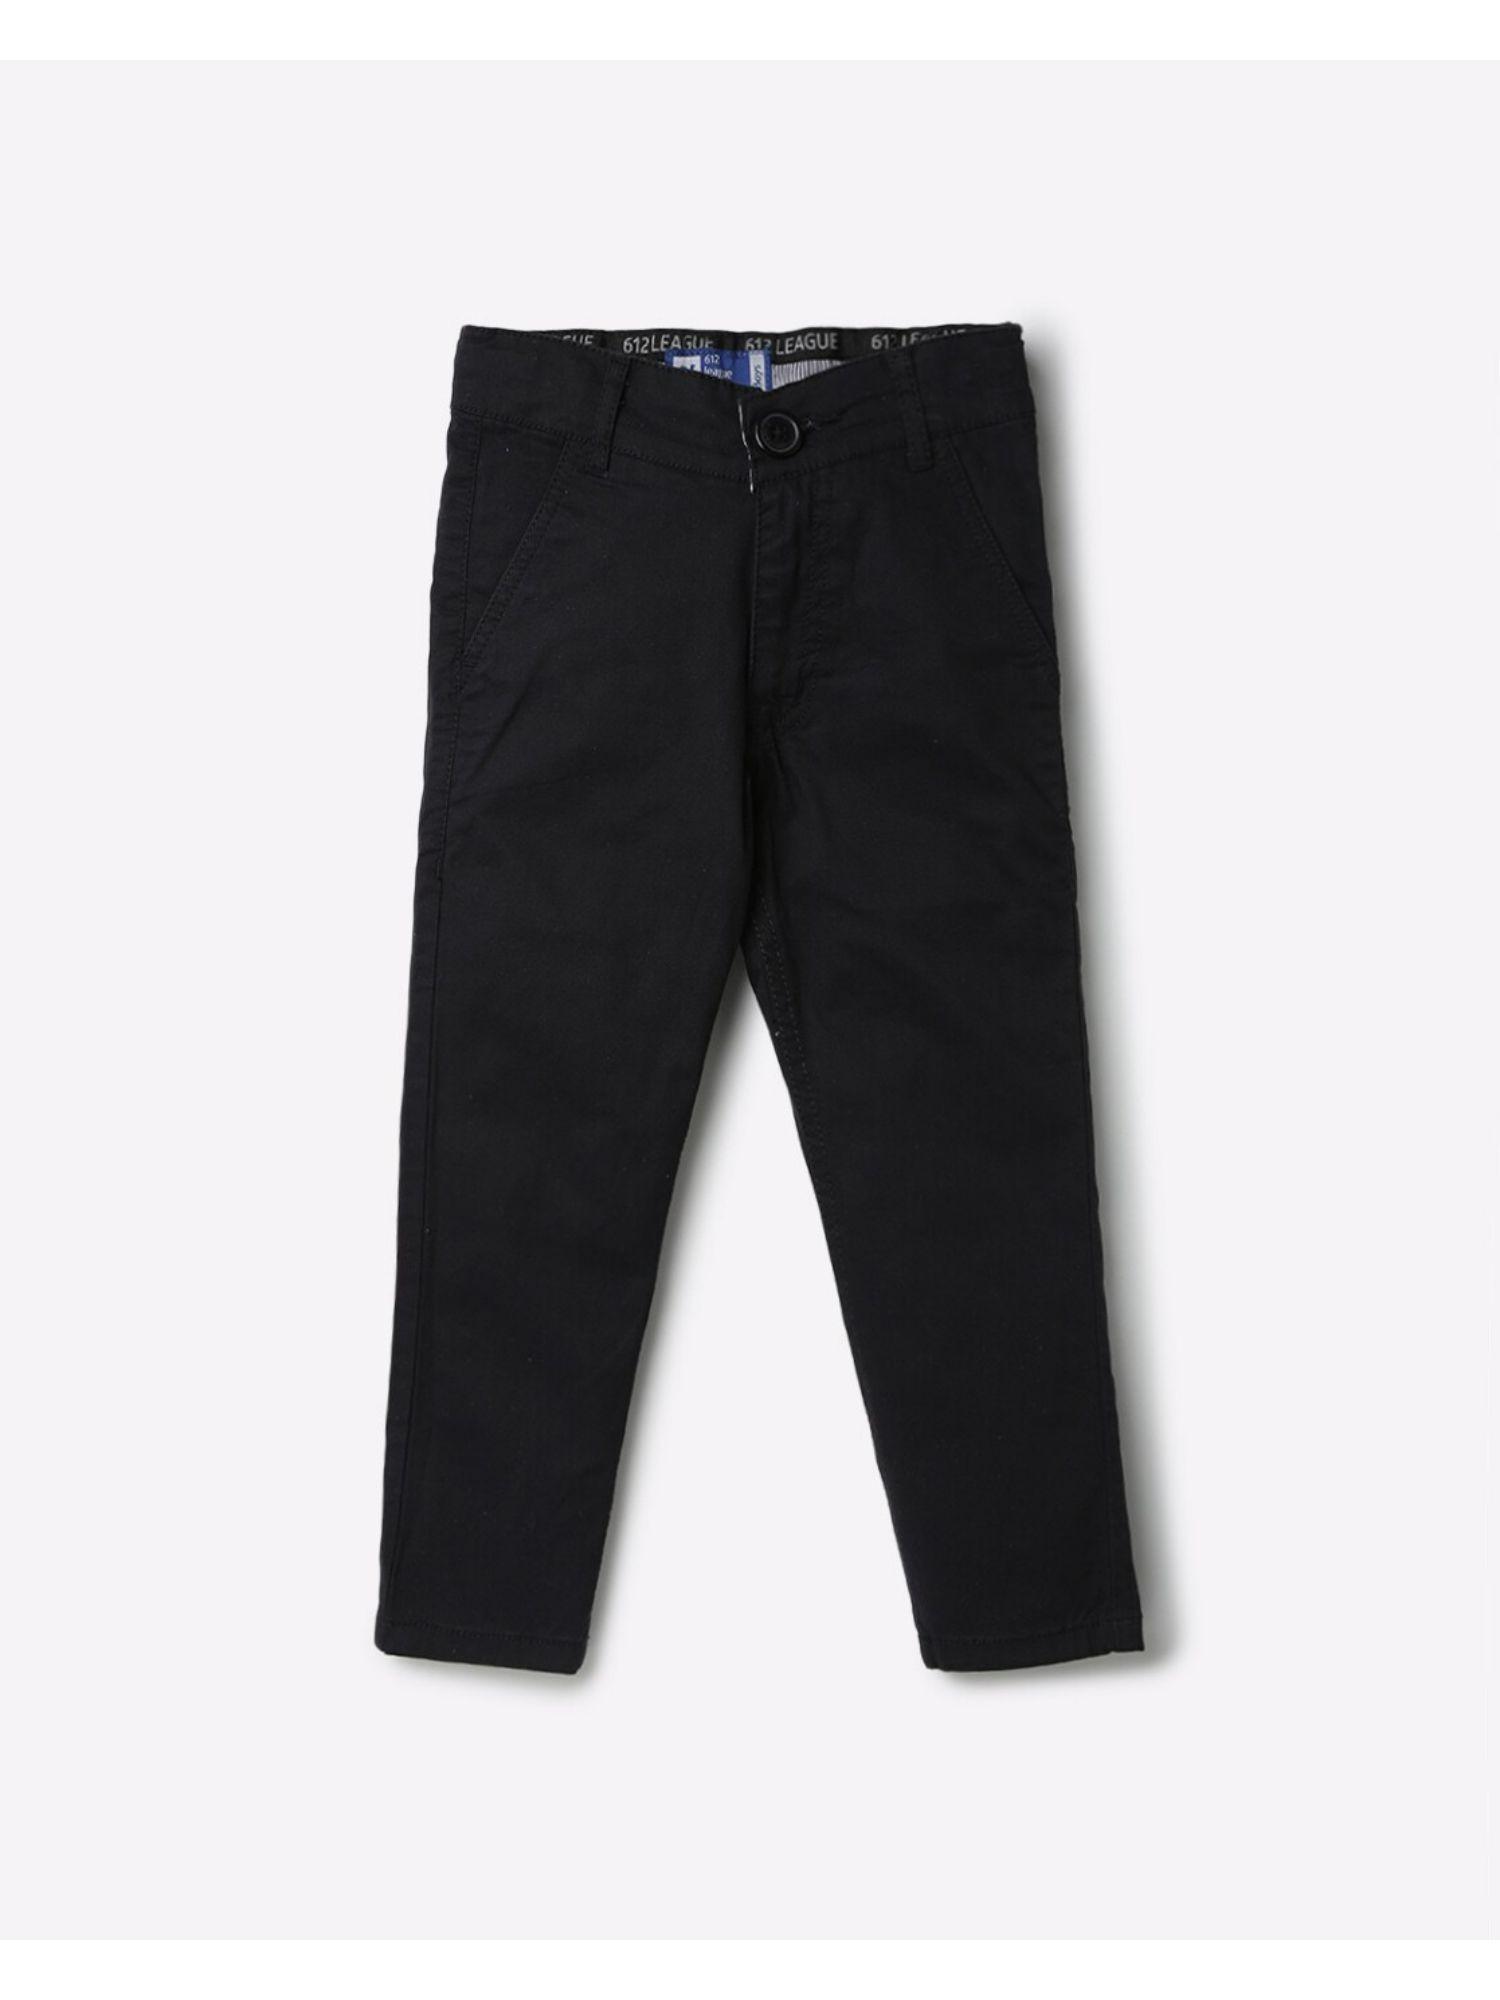 boy's pants in black color